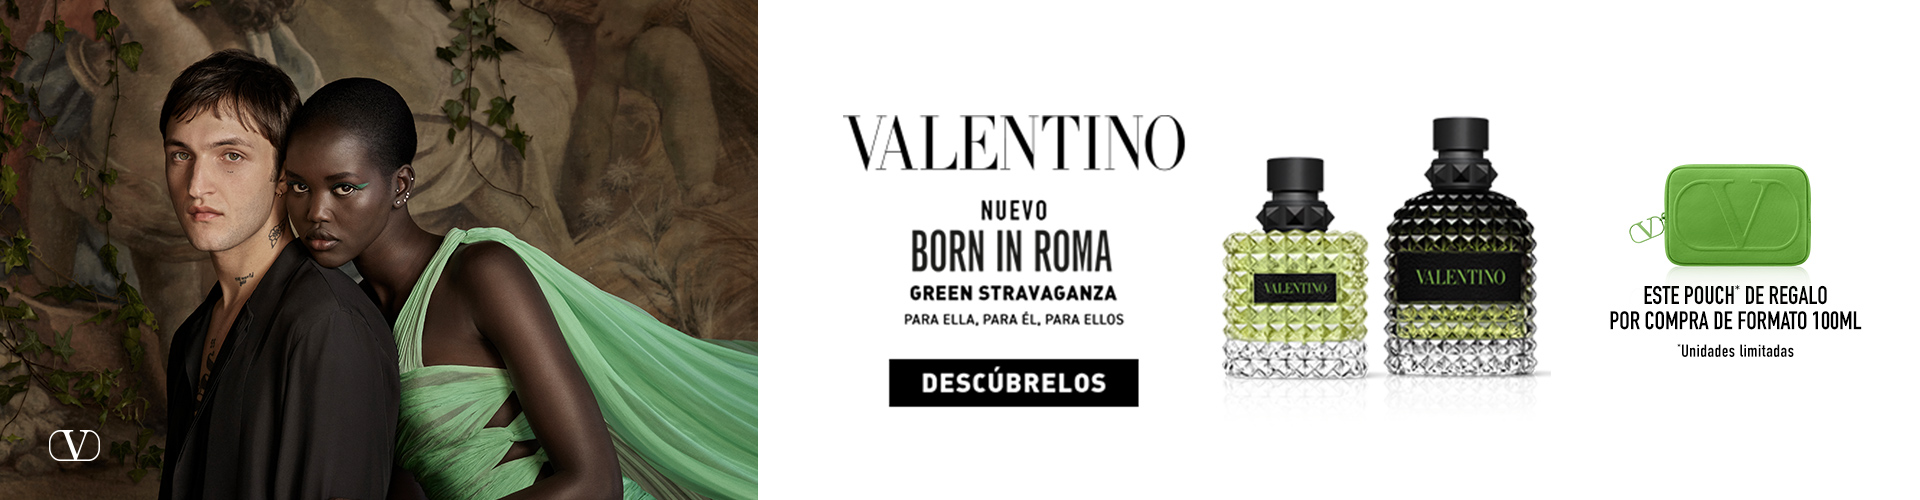 Valentino Born in Roma Green Stravaganza | Nuevos Perfumes | Prieto.es